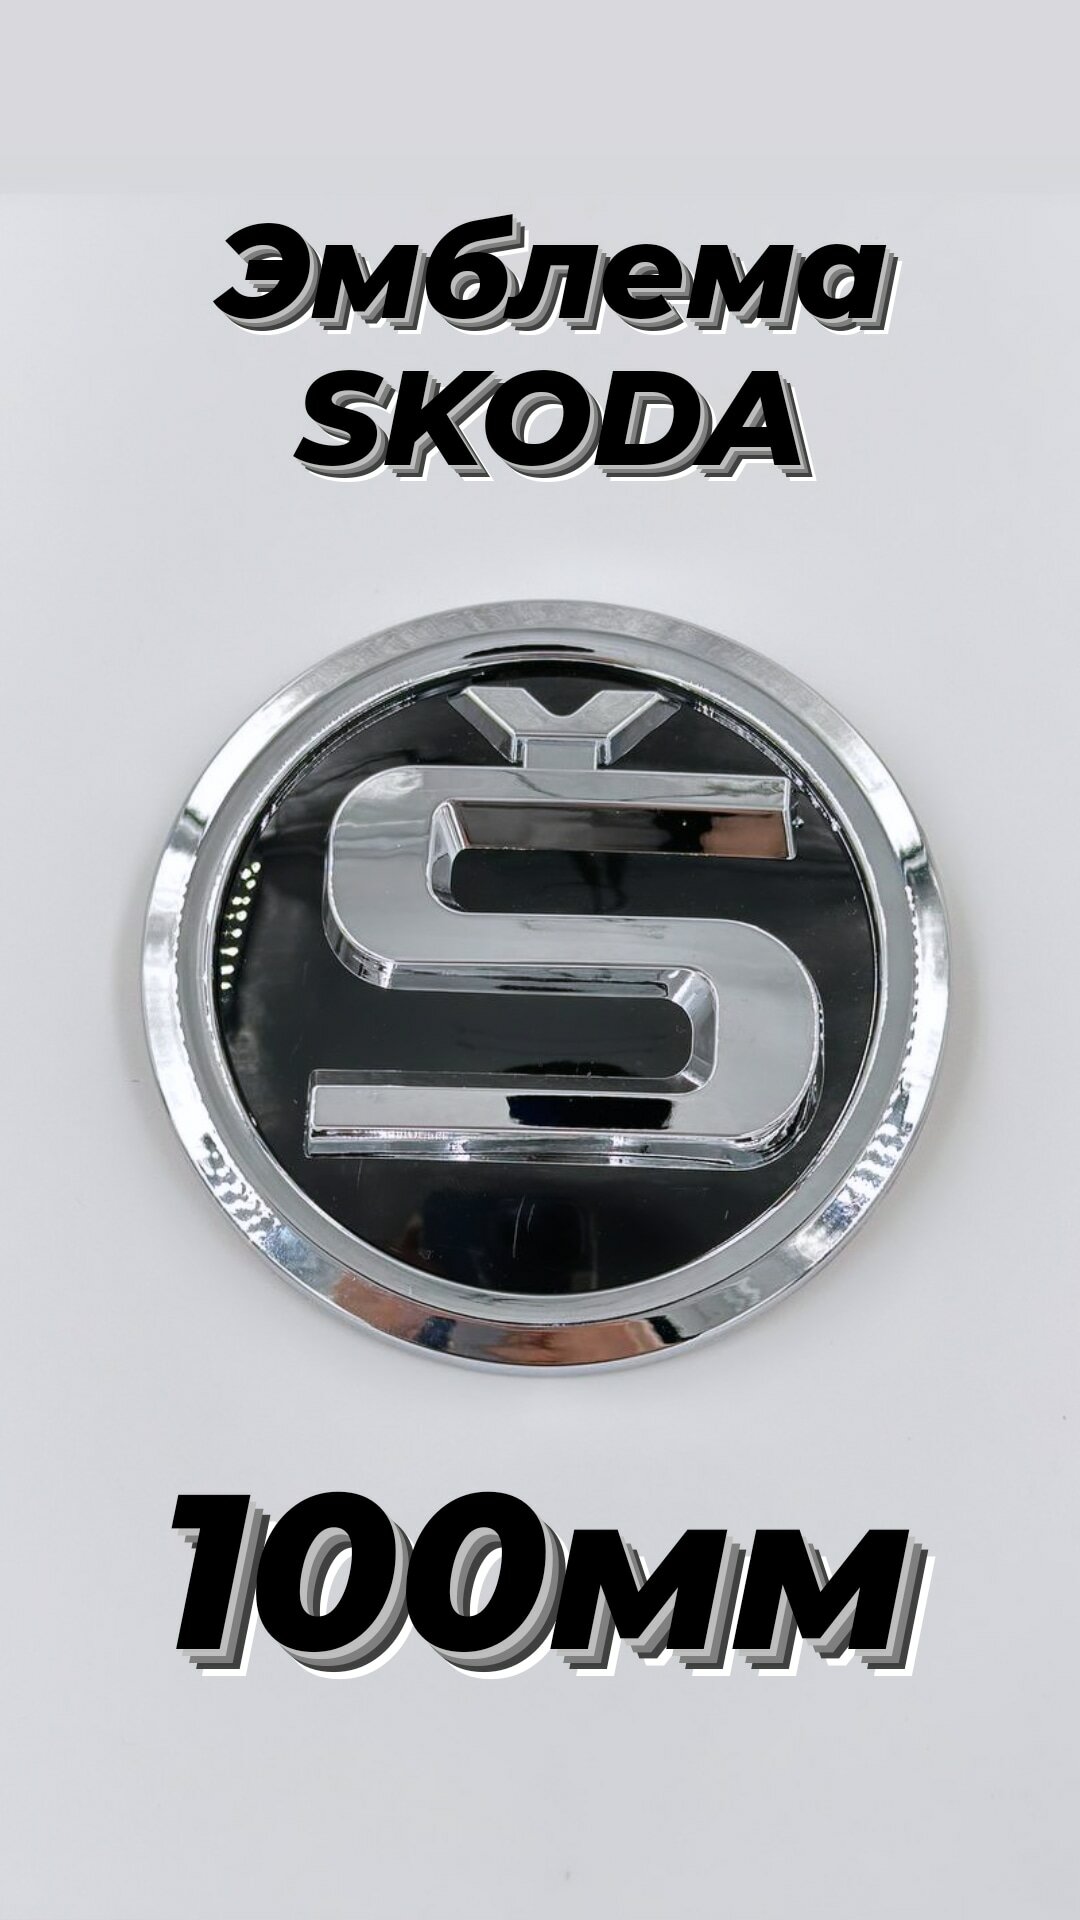 Эмблема на автомобиль Шкода, Skoda 100 мм